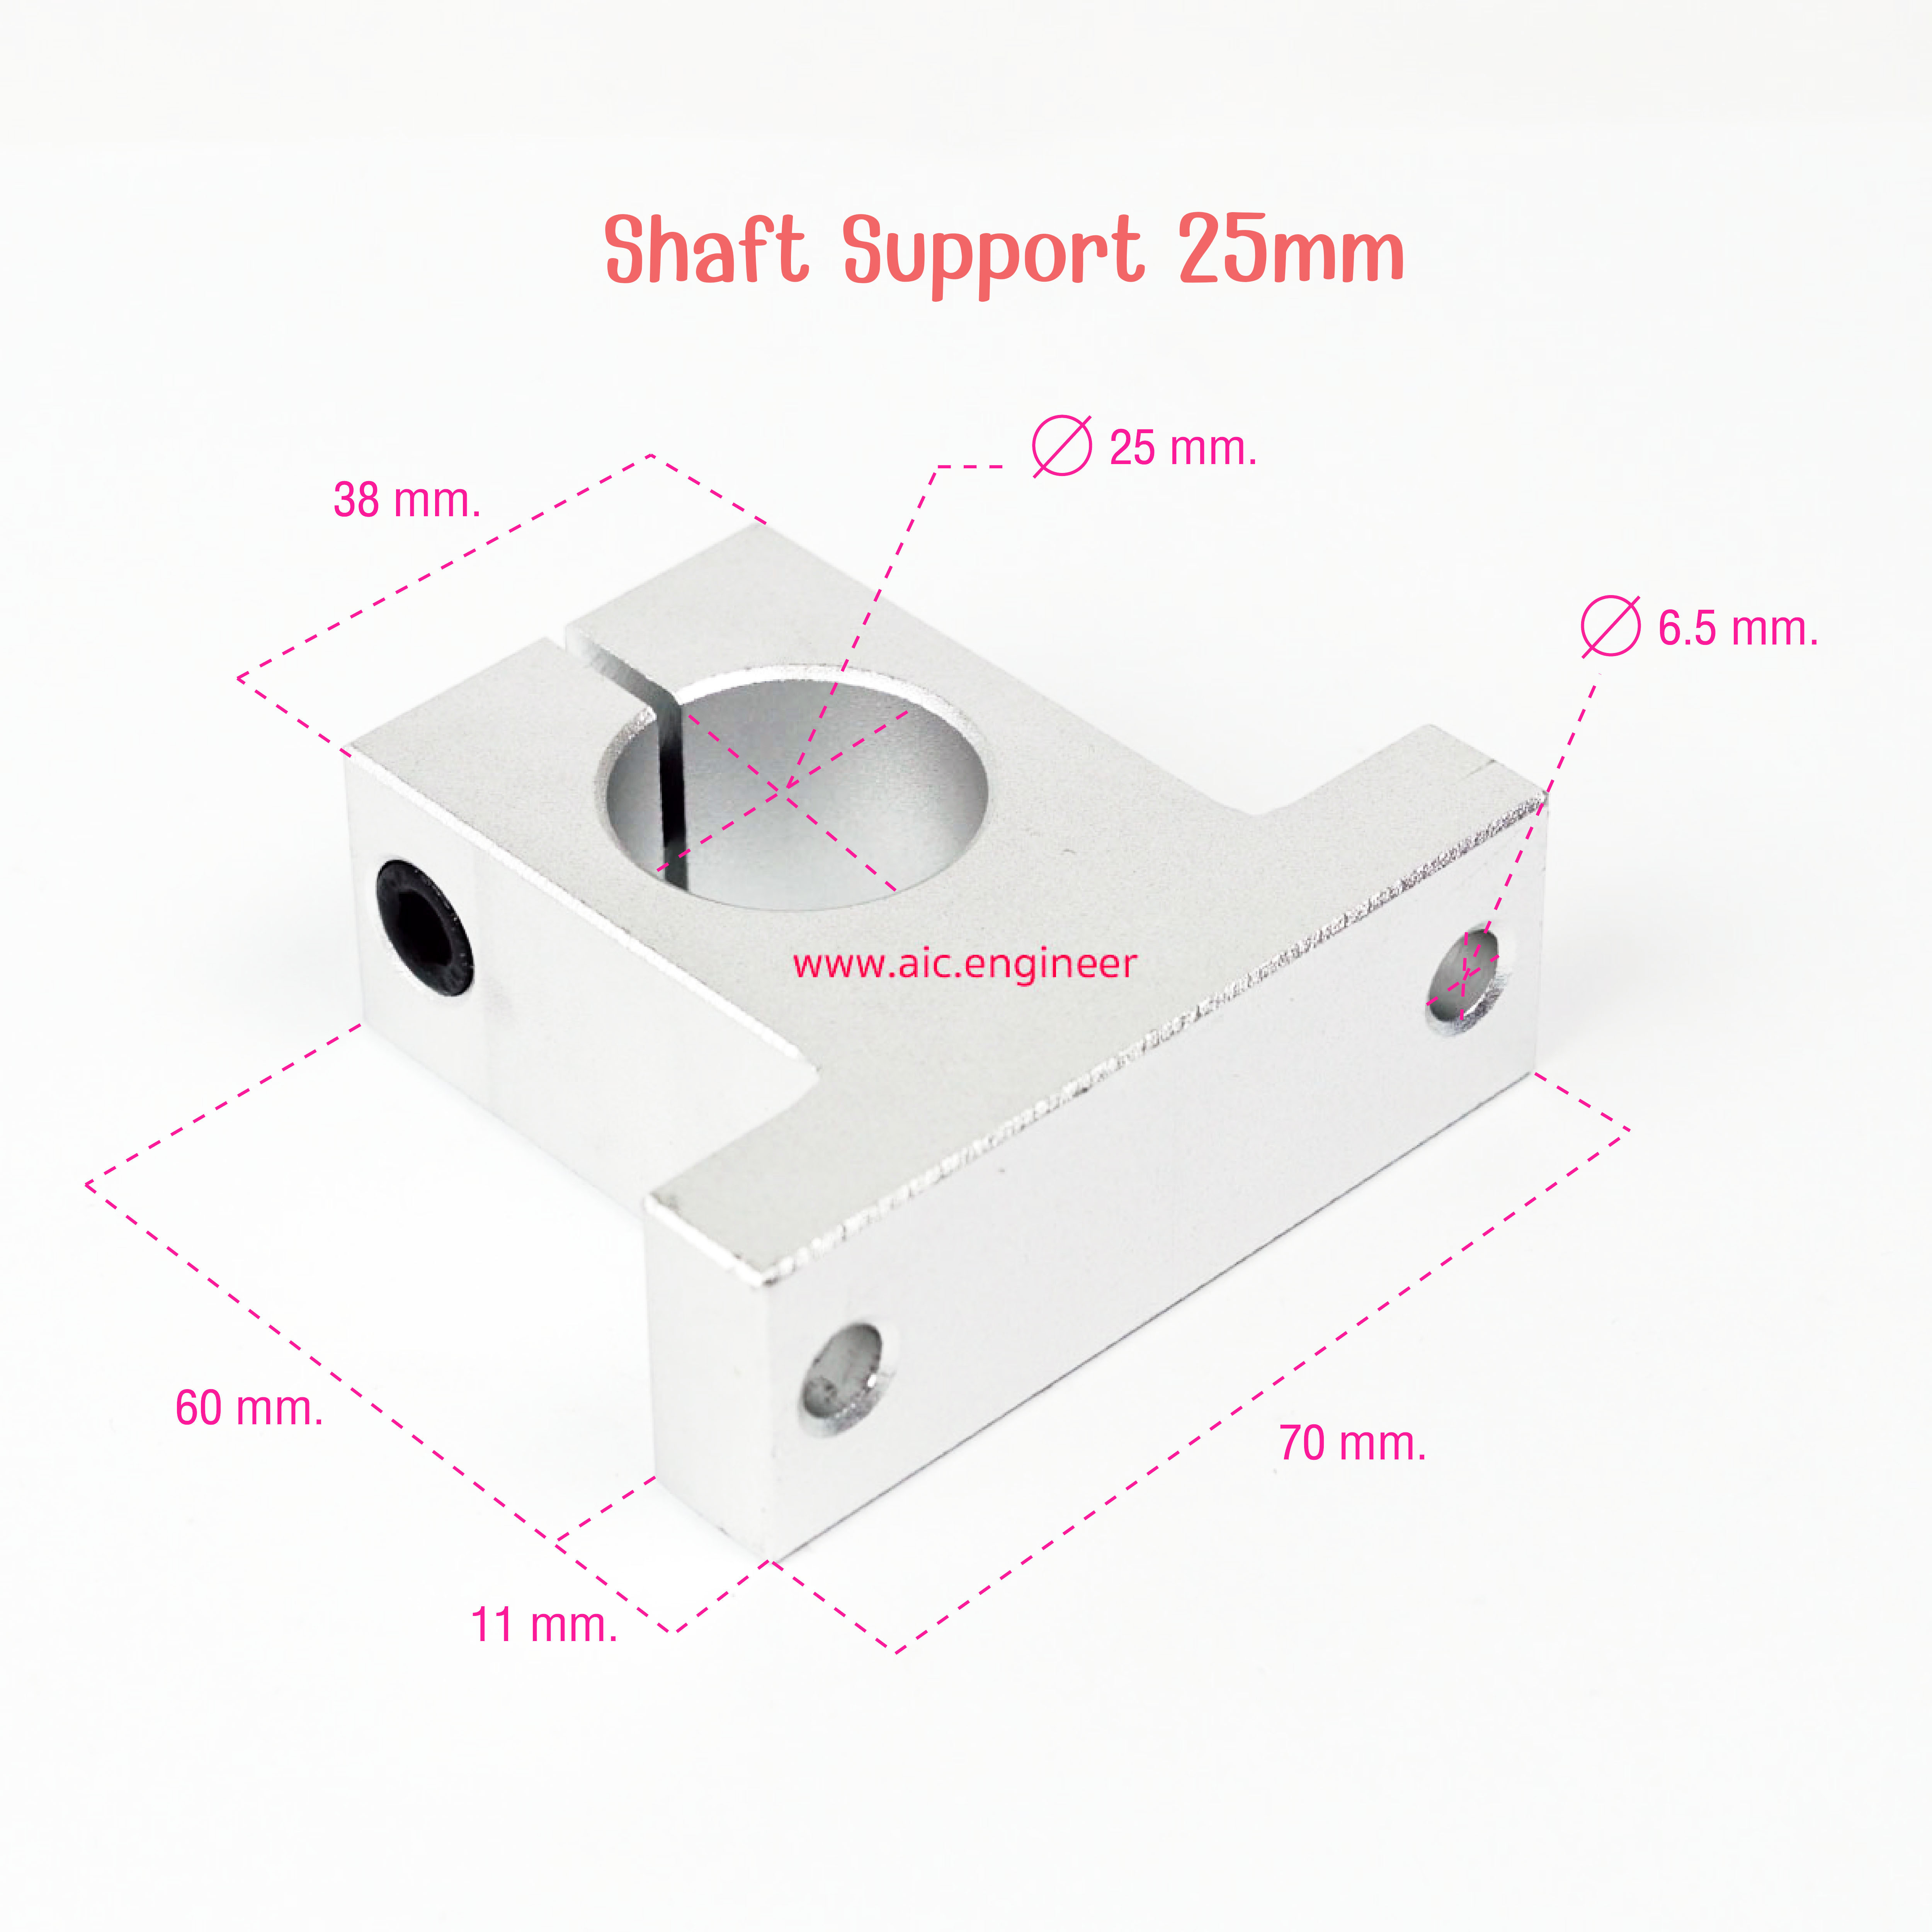 Shaft Support 25mm